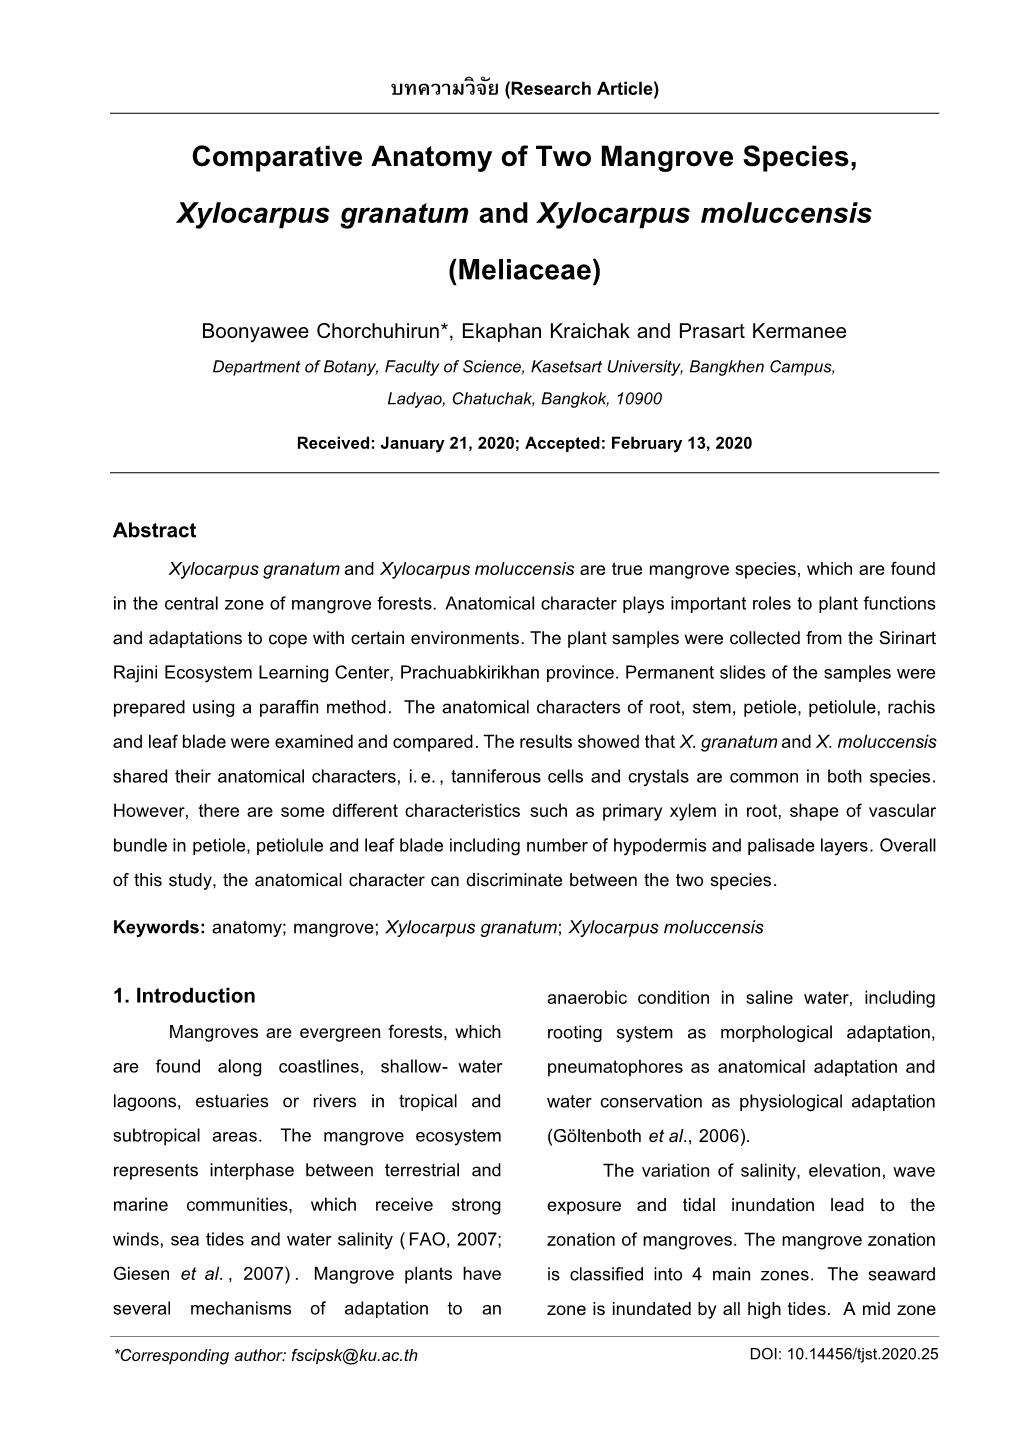 Comparative Anatomy of Two Mangrove Species, Xylocarpus Granatum and Xylocarpus Moluccensis (Meliaceae)